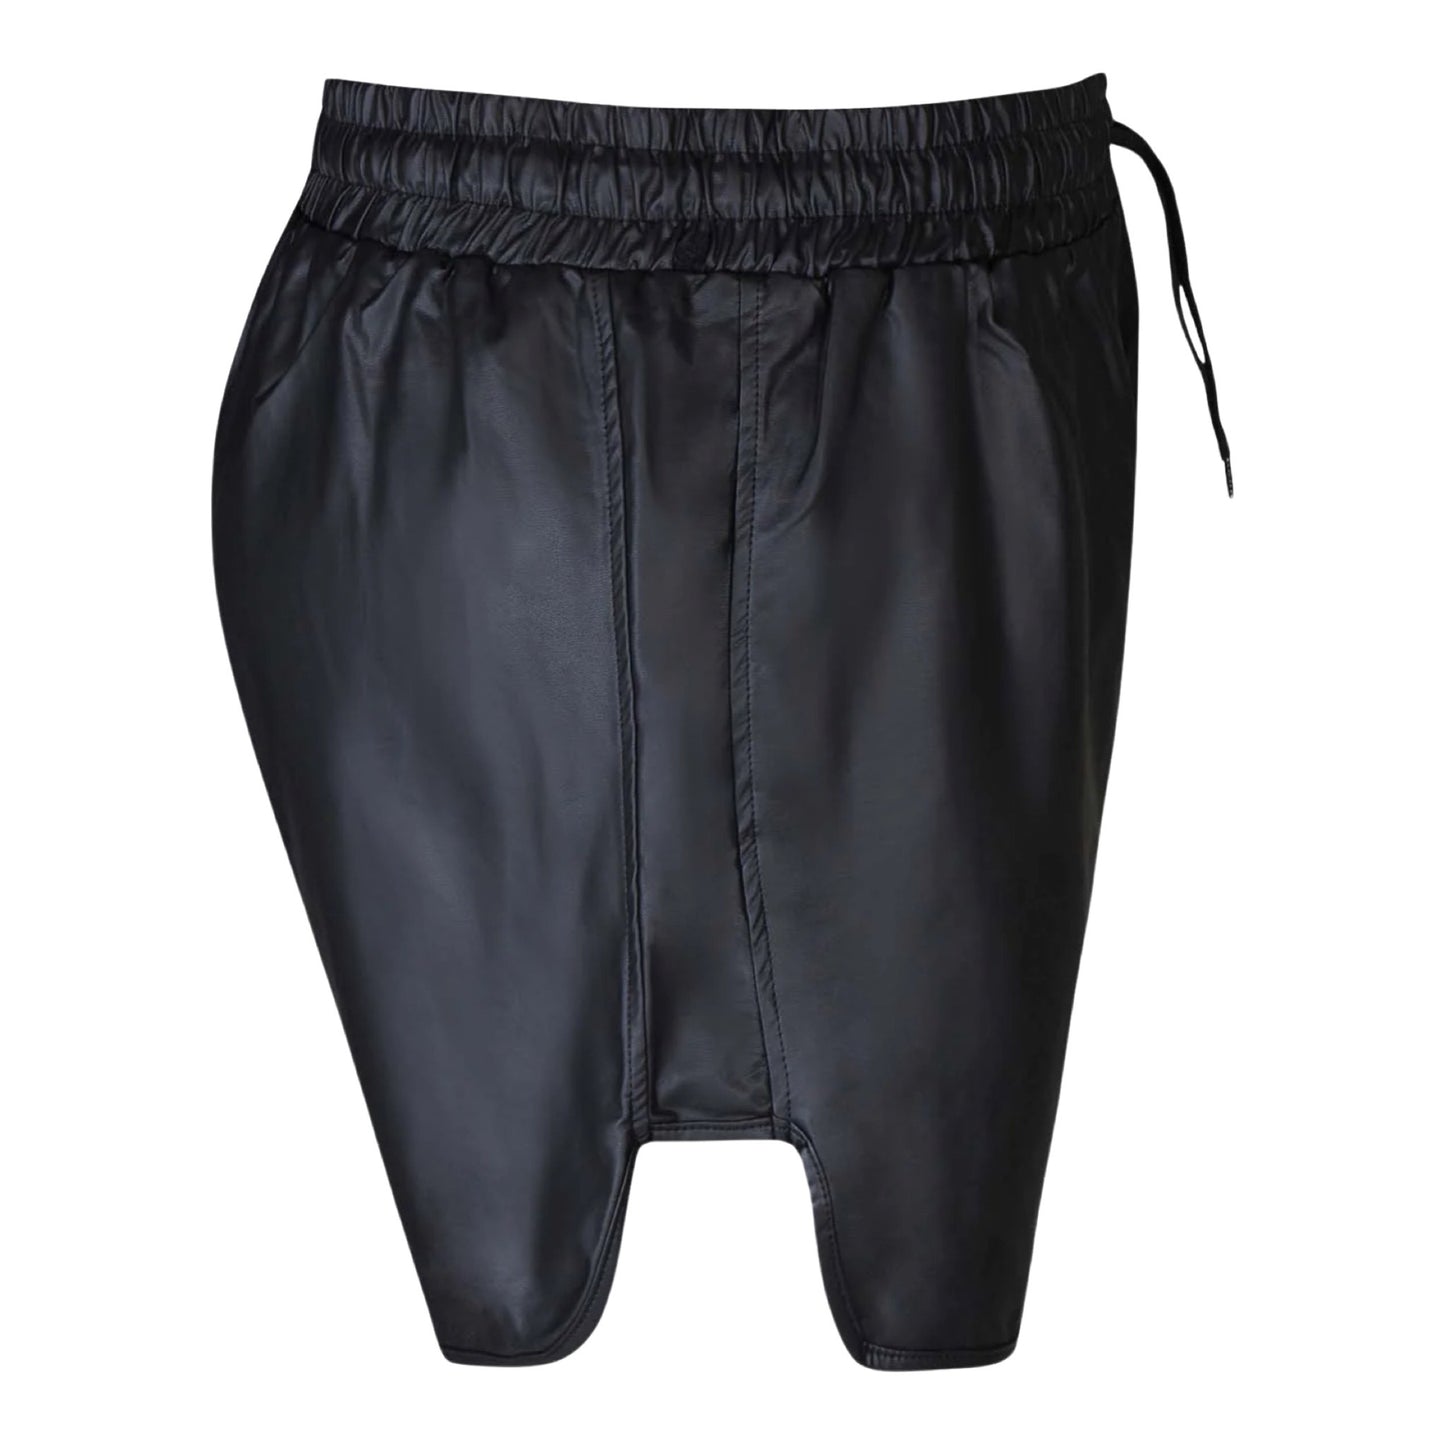 Anyday - Kaia 067 shorts - Black